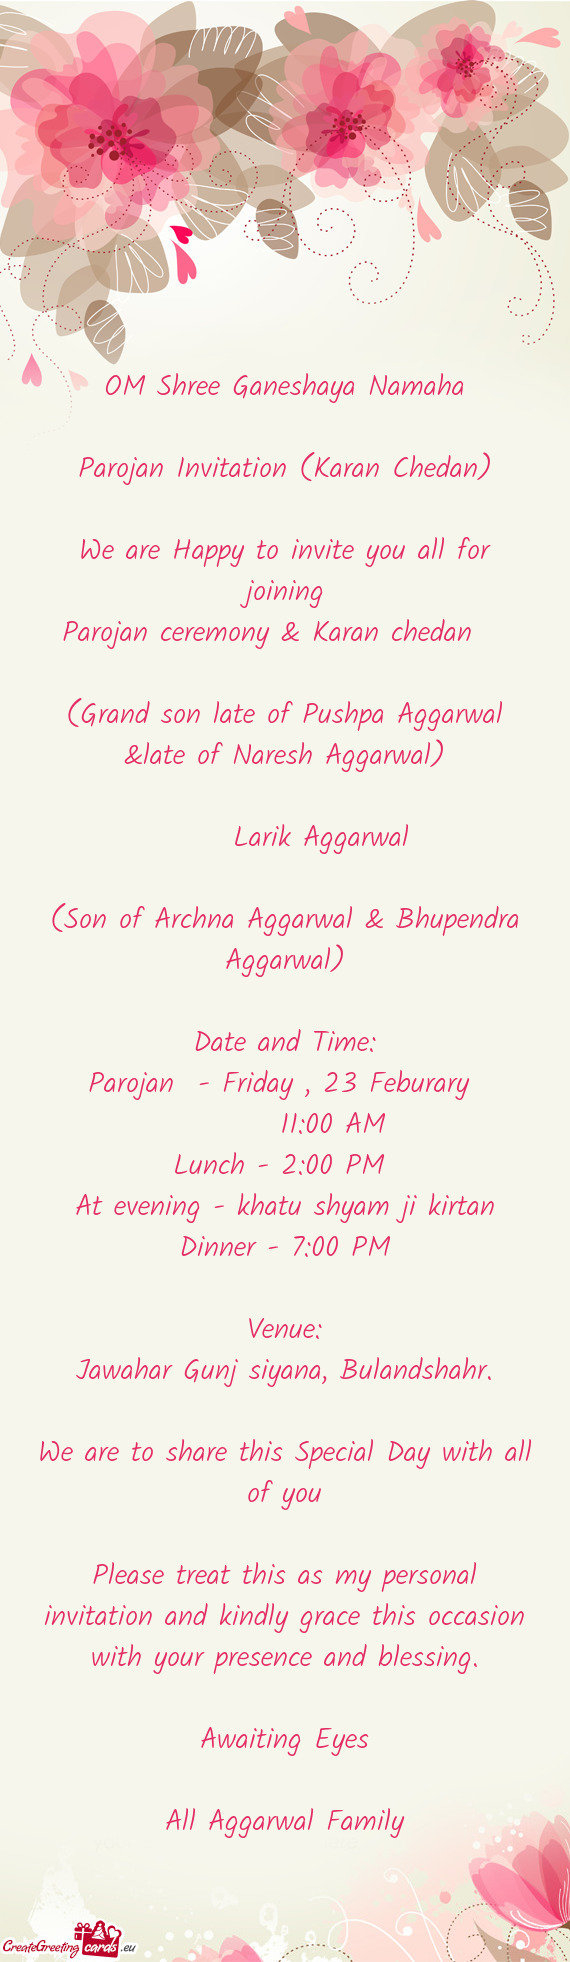 R joining Parojan ceremony & Karan chedan  (Grand son late of Pushpa Aggarwal &late of Naresh